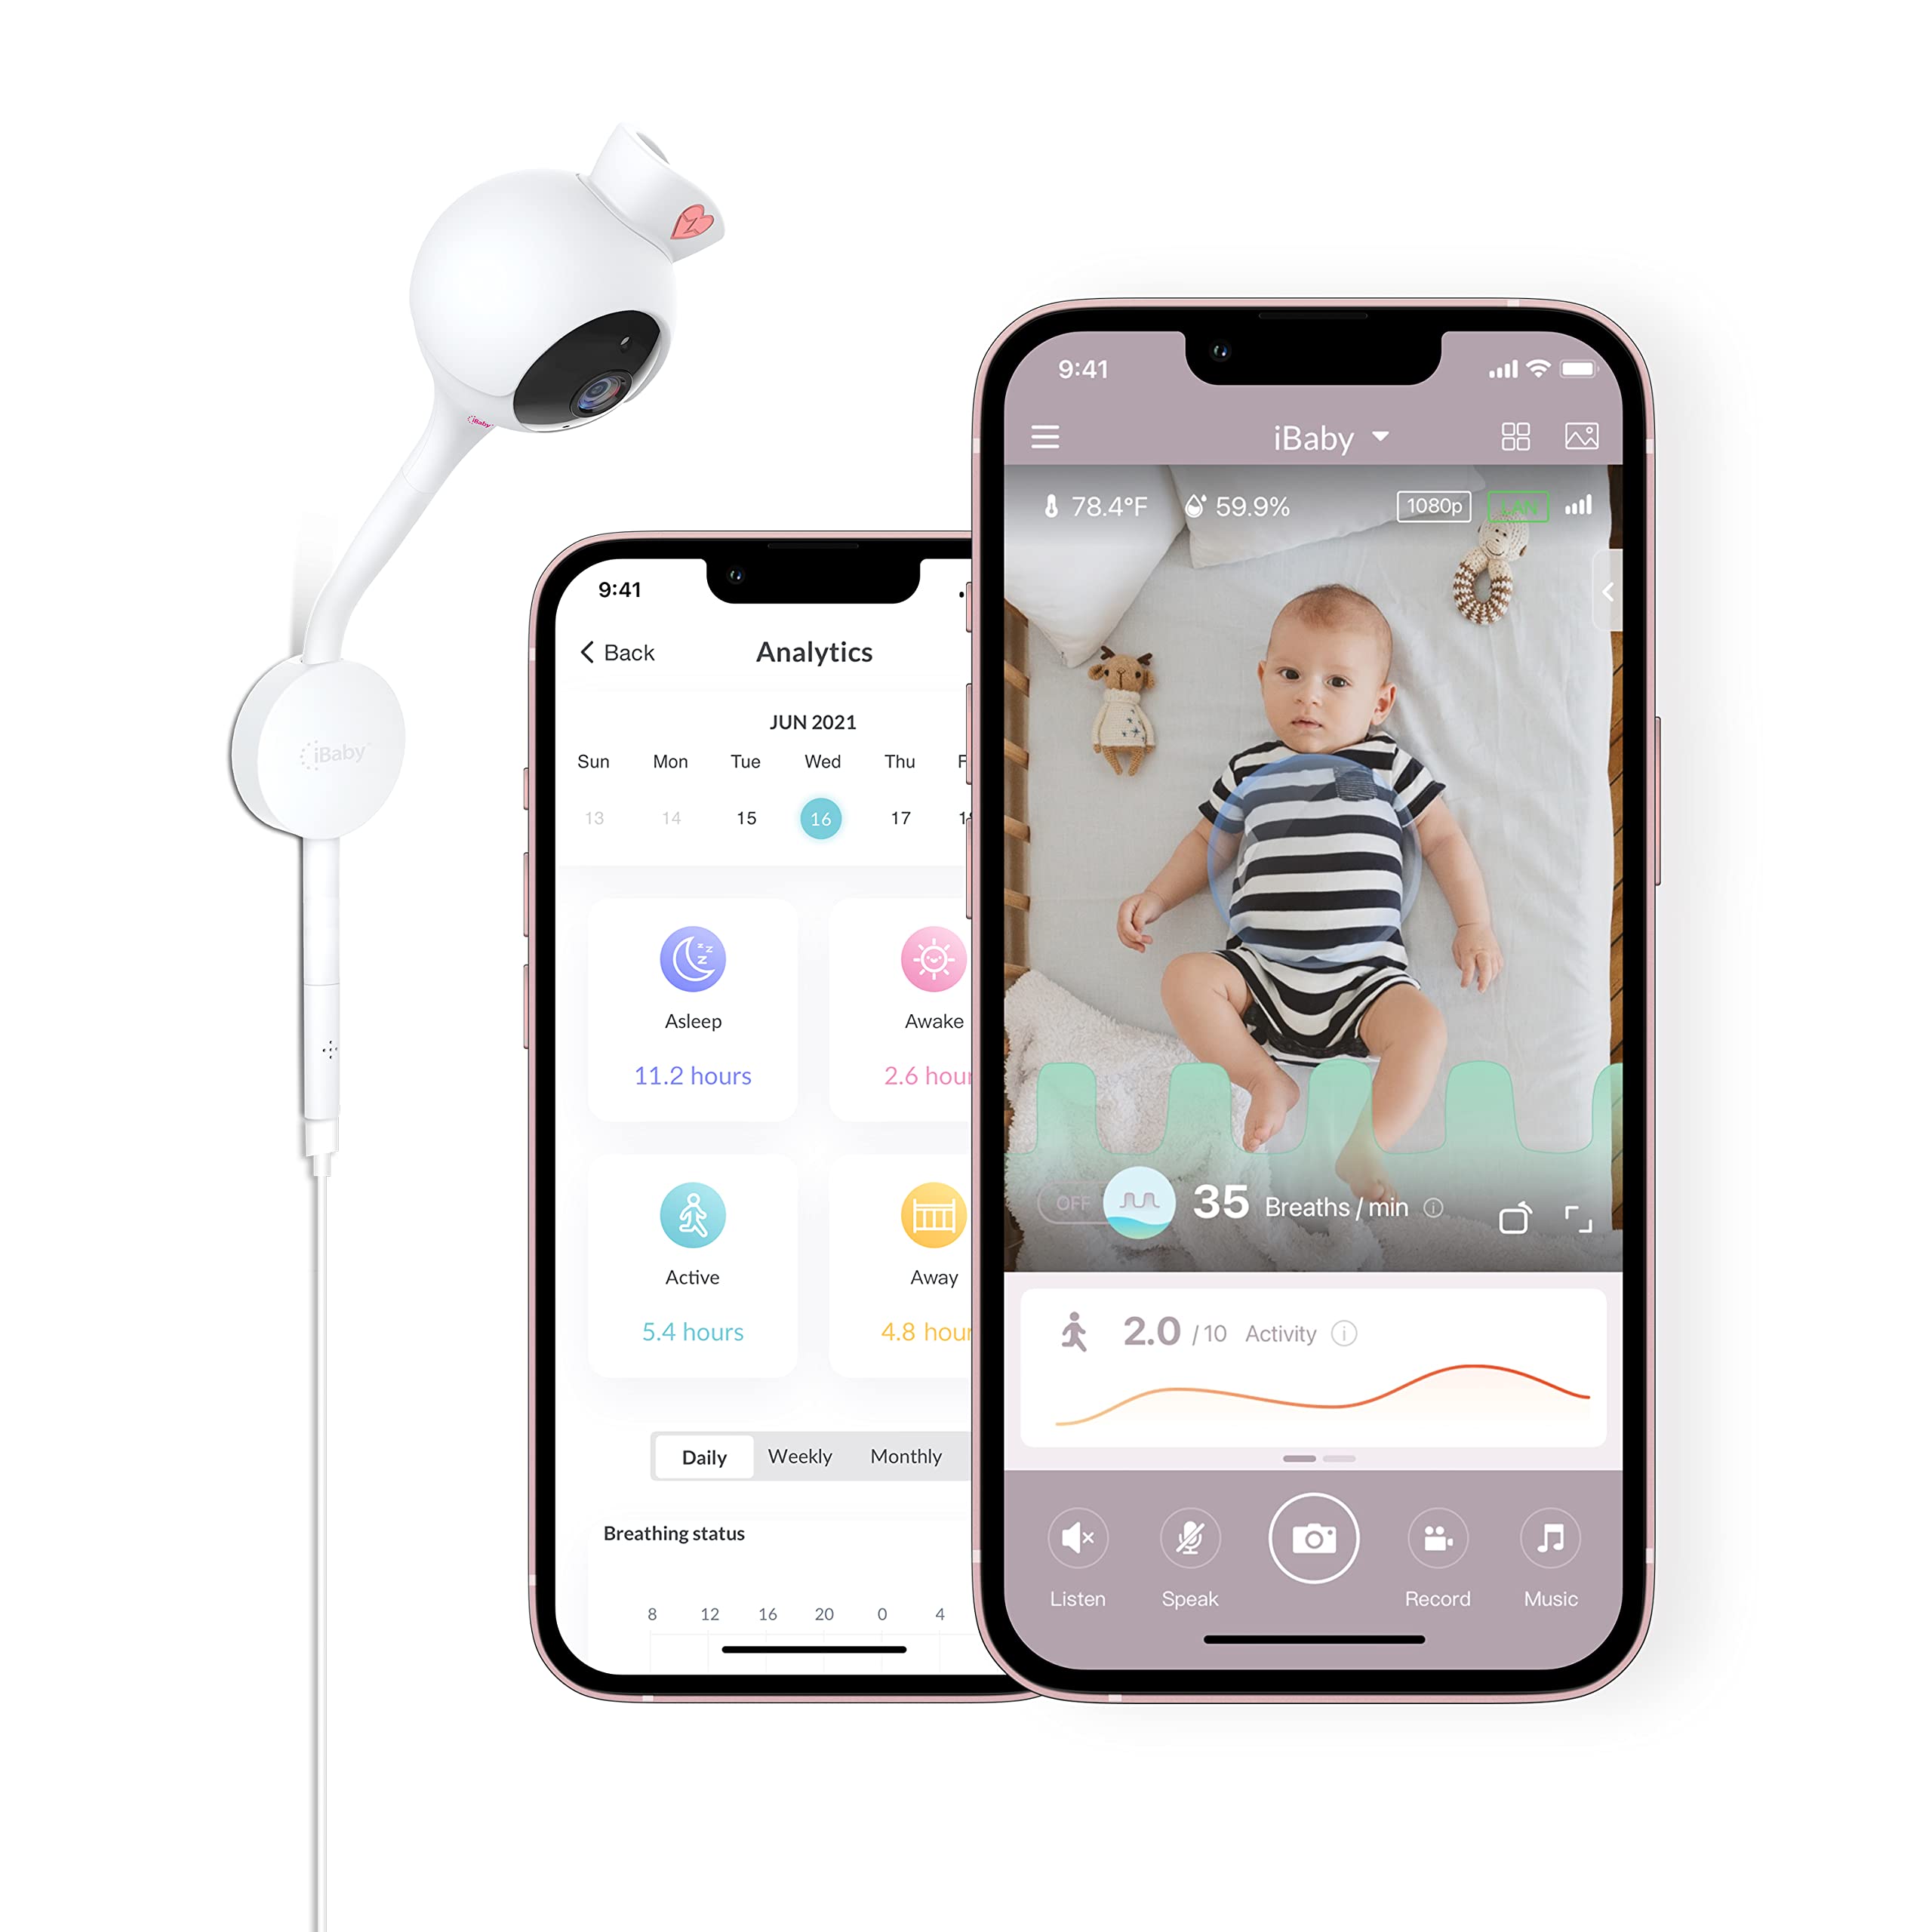 Babyphone audio Handy Care - Made in Bébé